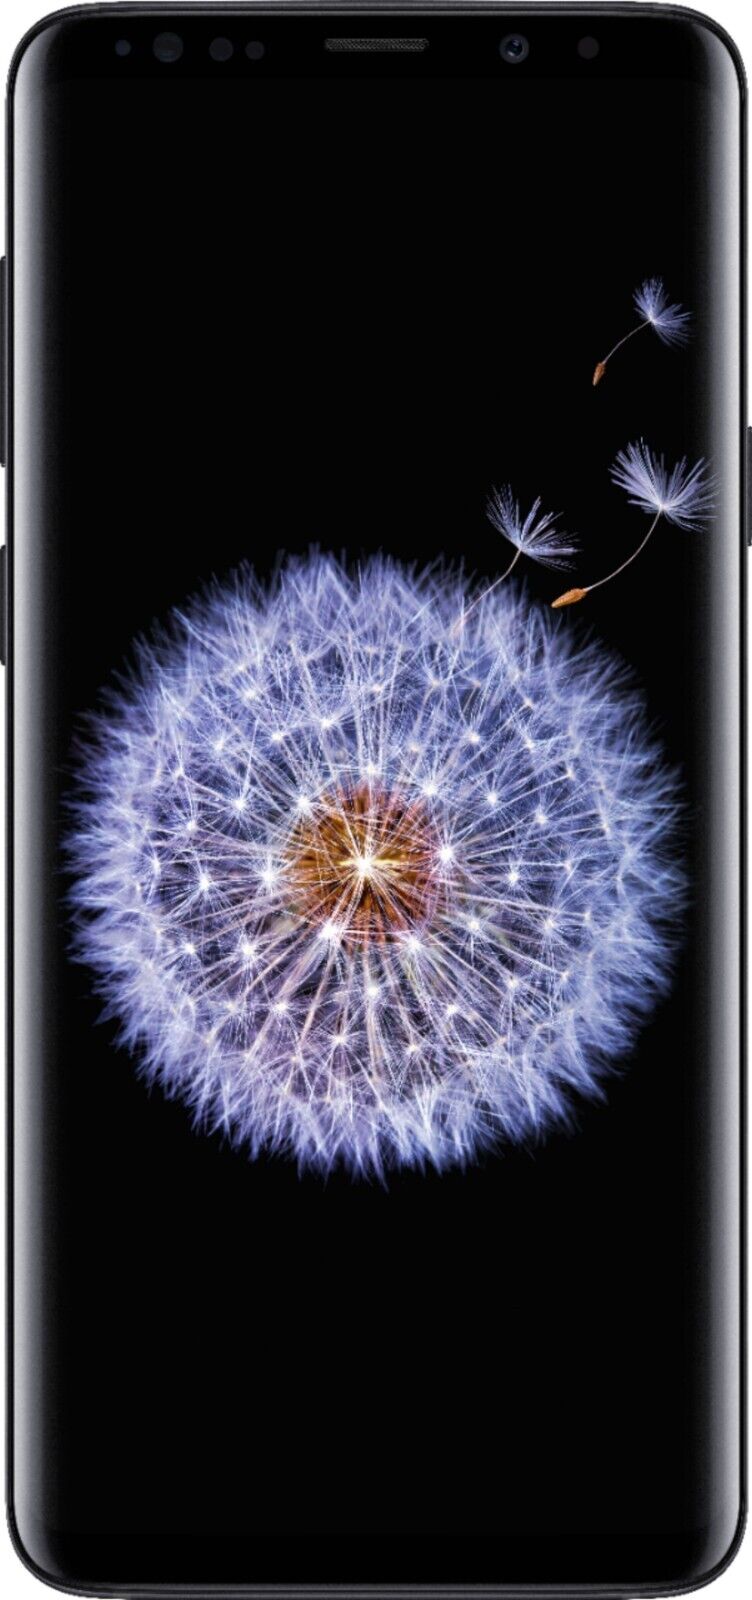 Galaxy S9+ 64GB - Midnight Black - Fully unlocked (GSM & CDMA)